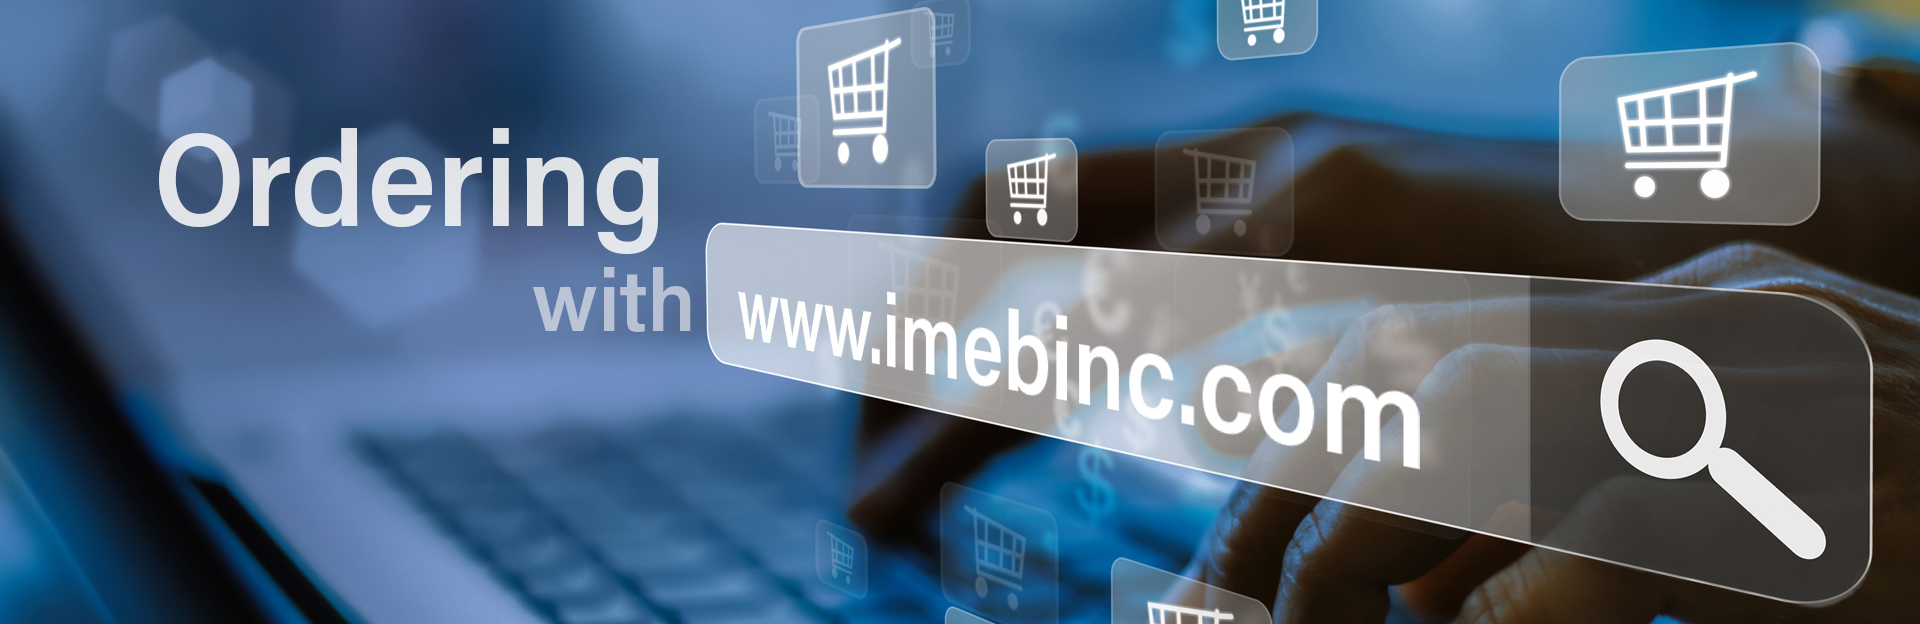 Order medical supplies from IMEB Inc www.imebinc.com